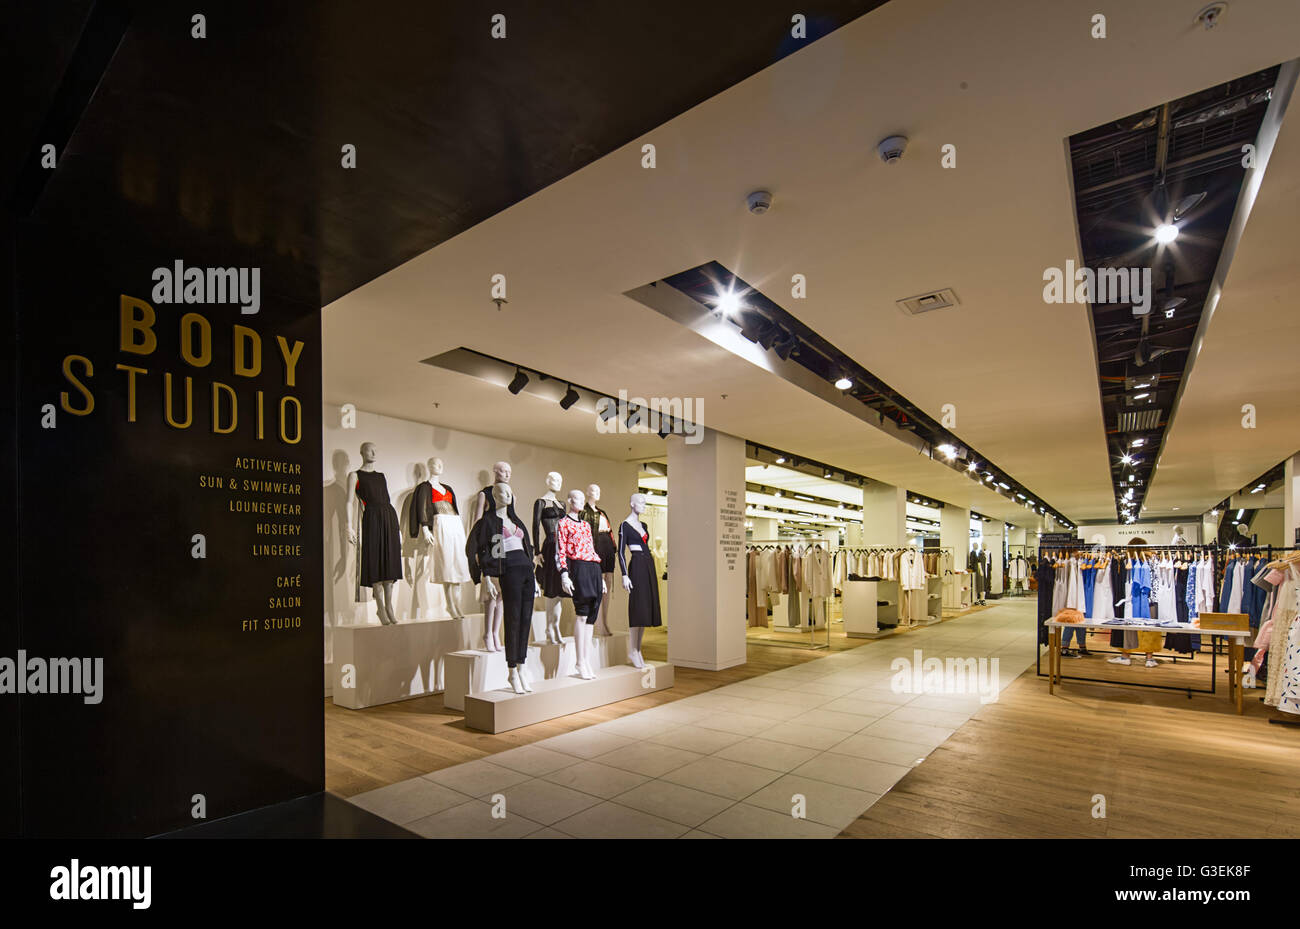 Modern Jogging Shop Yoga Mat Display Retail Yoga Store Interior Design  Ideas - Retail Shop Interior Design & Store Layout Design